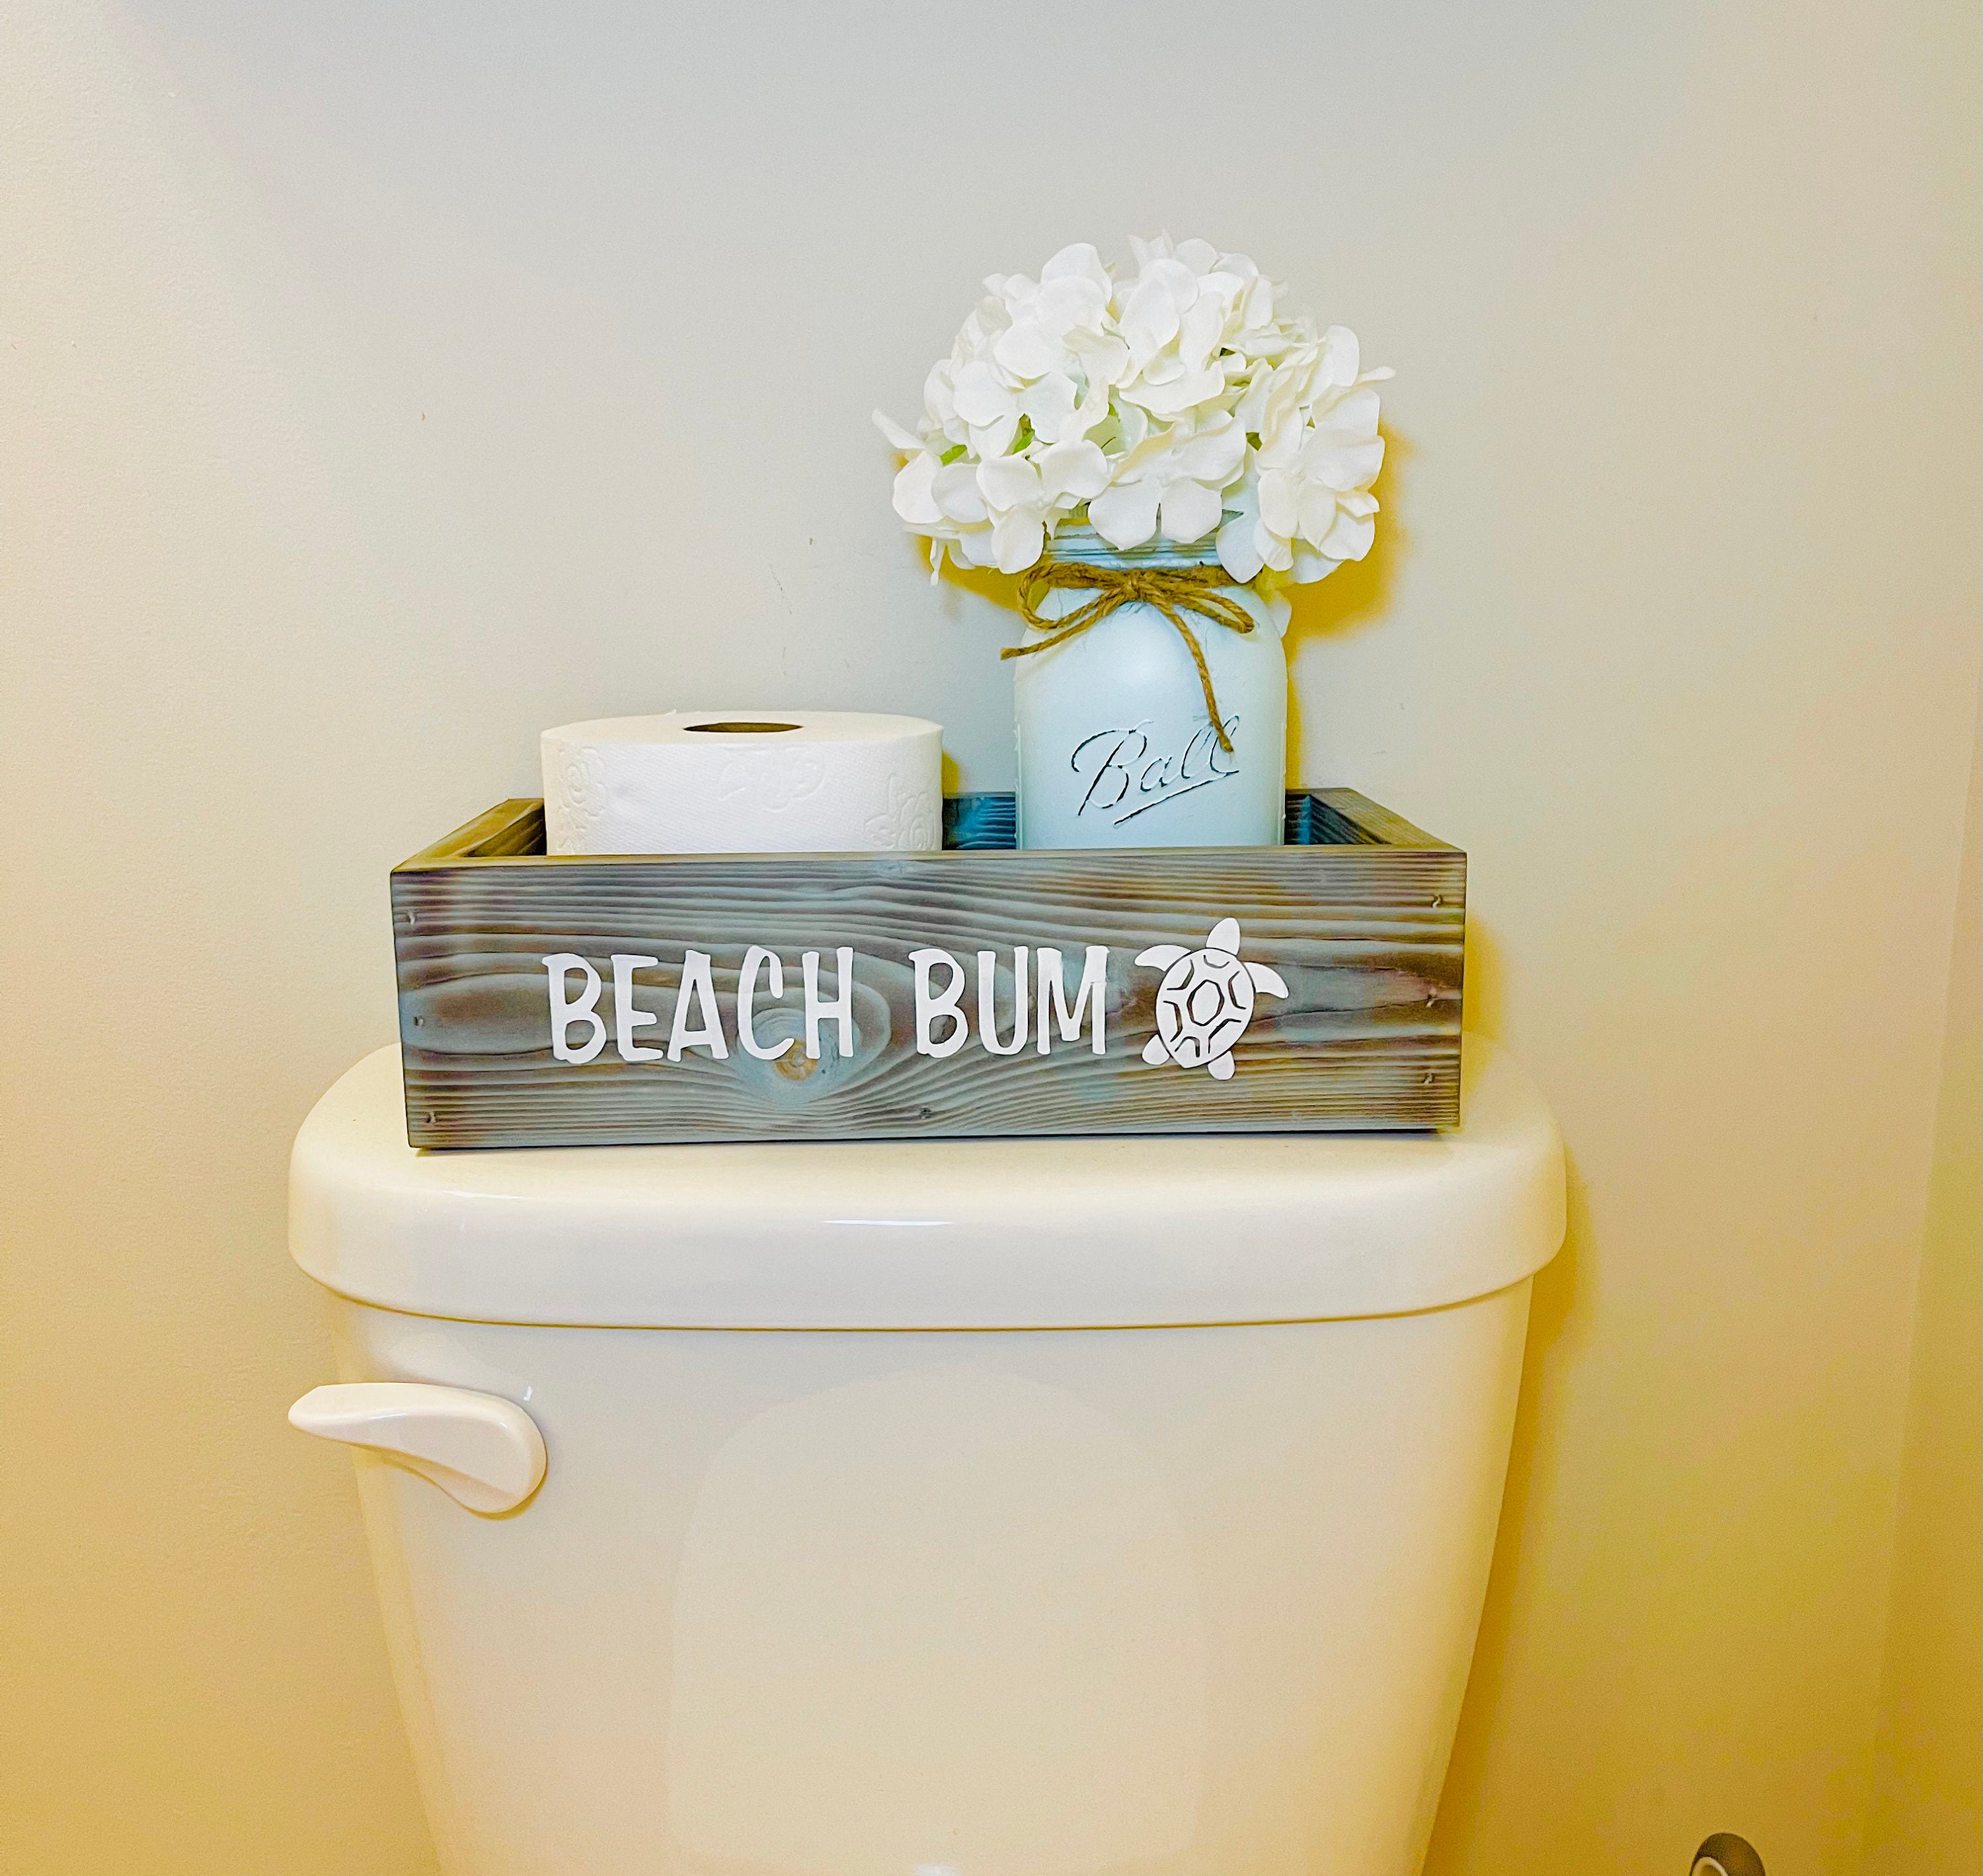 Toilet Paper Storage, Toilet Tank Top, Beach Bum Bathroom, Beach